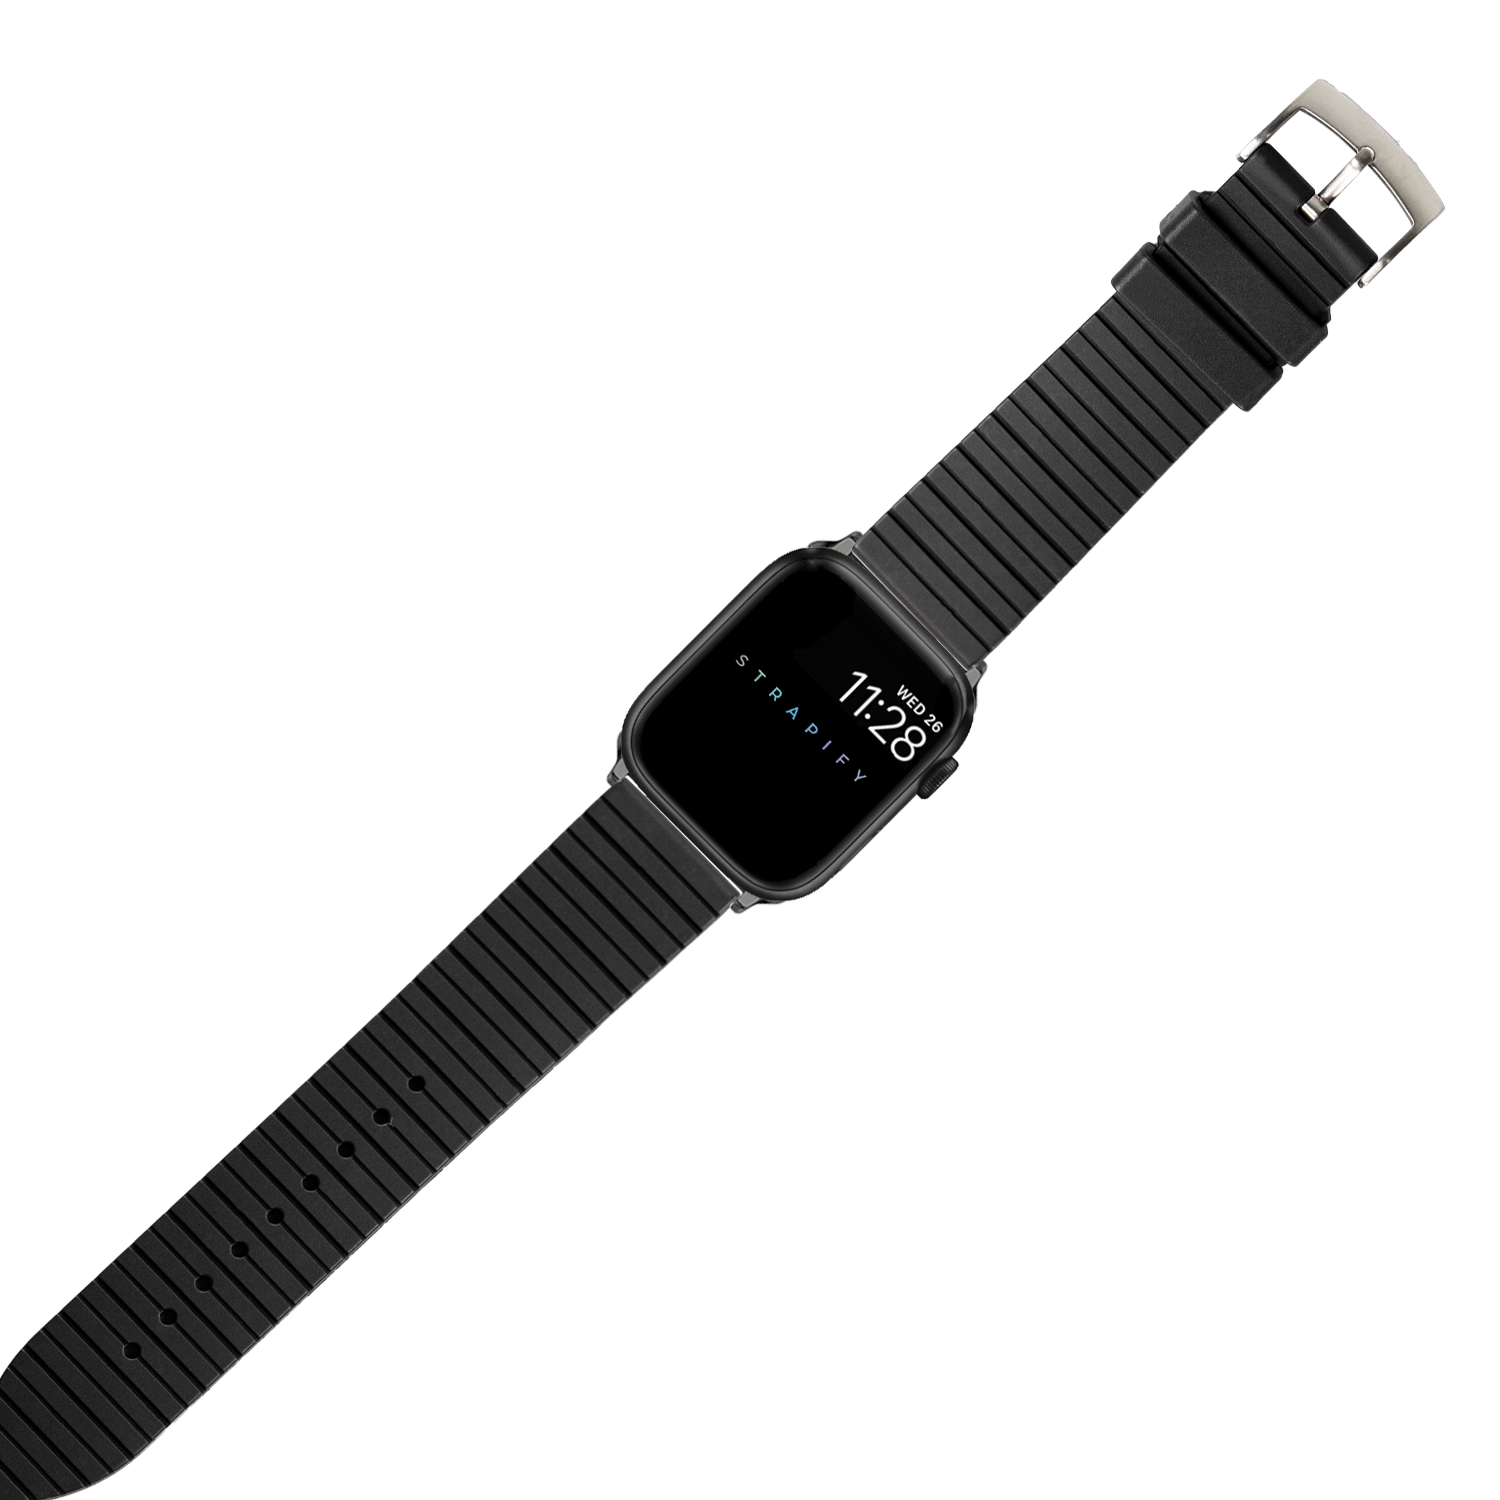 [Apple Watch] King Panelarc FKM Rubber - Black